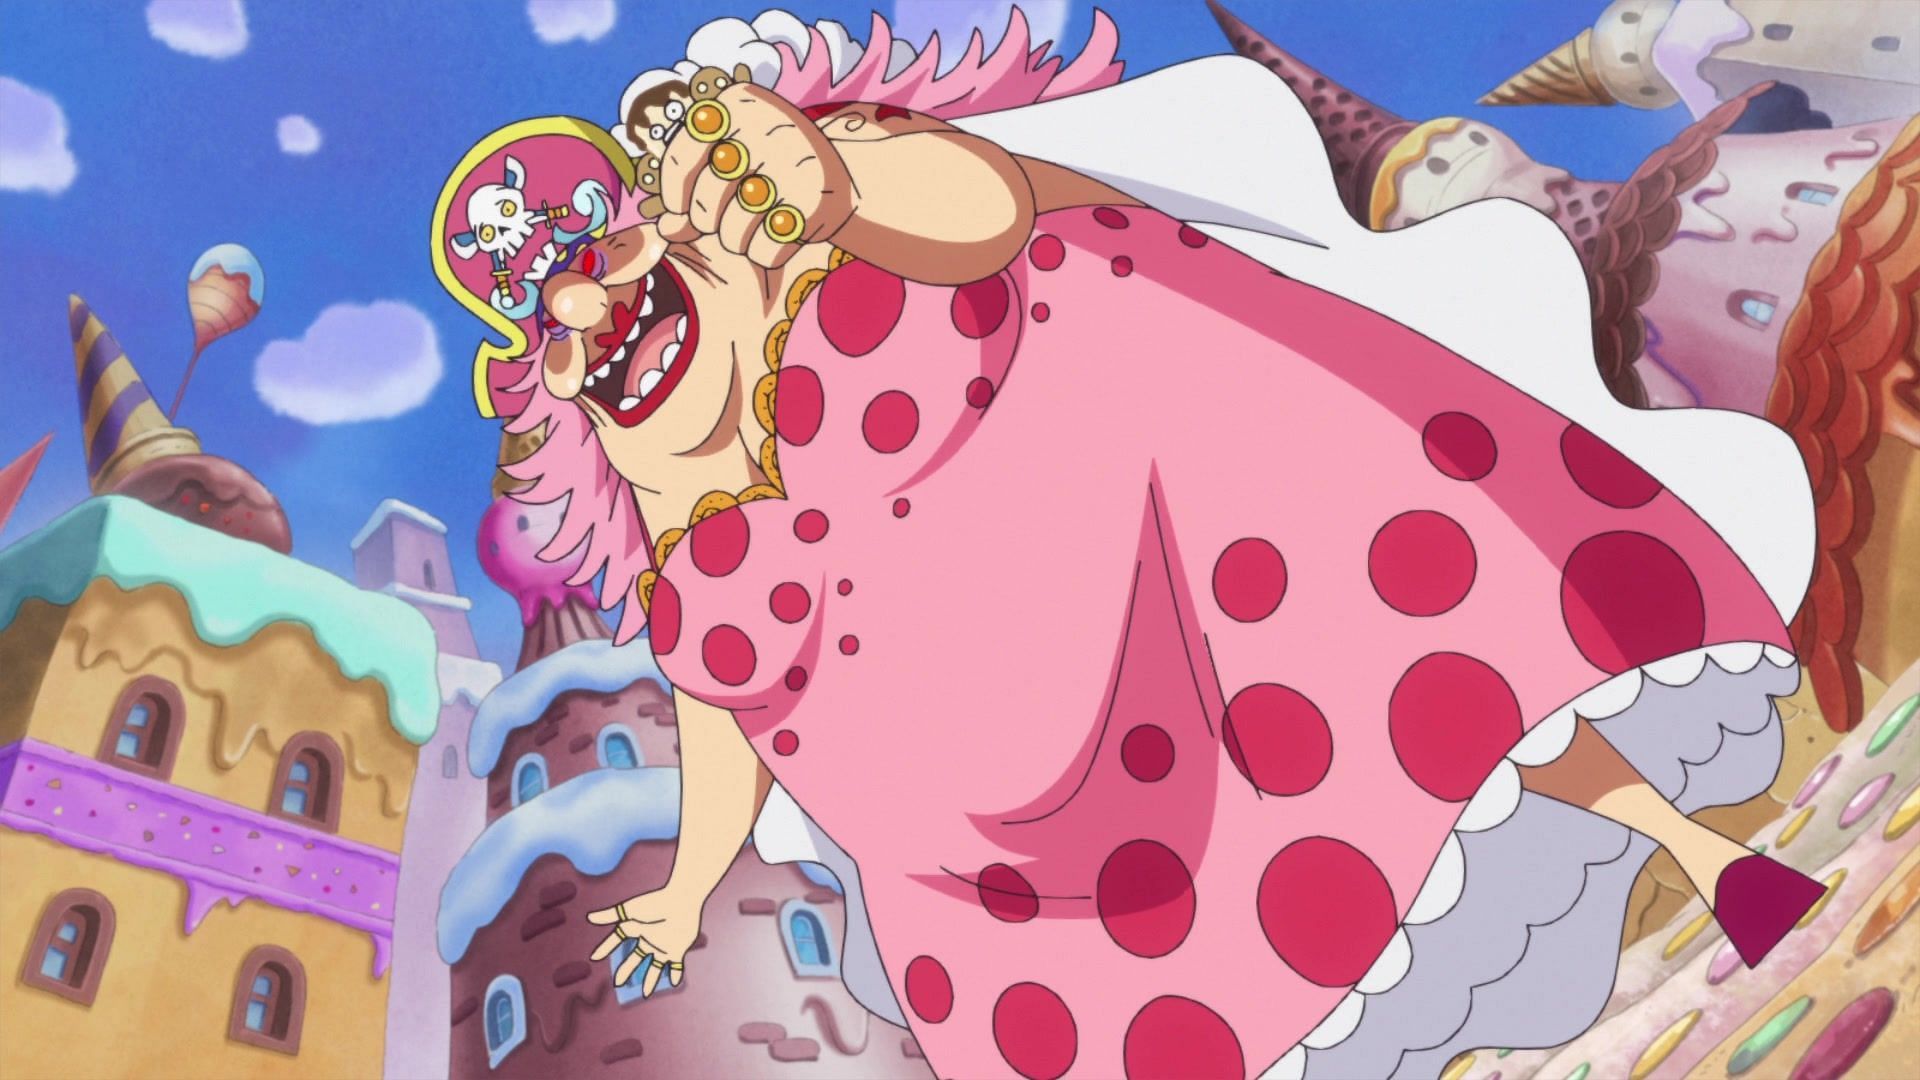 Big Mom will always be an iconic villain (Image via Toei Animation)